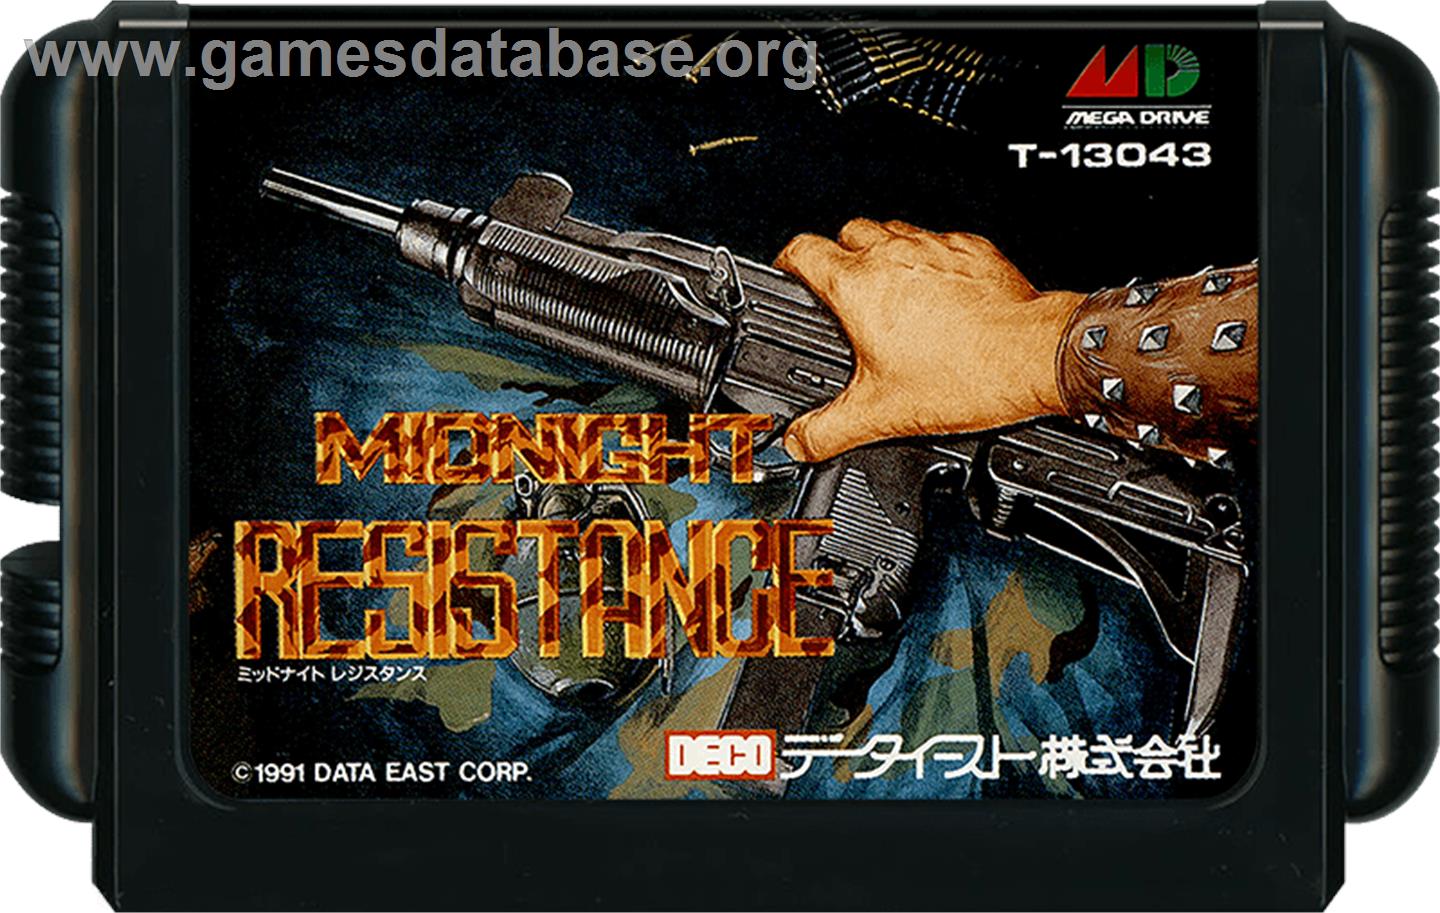 Midnight Resistance - Sega Genesis - Artwork - Cartridge